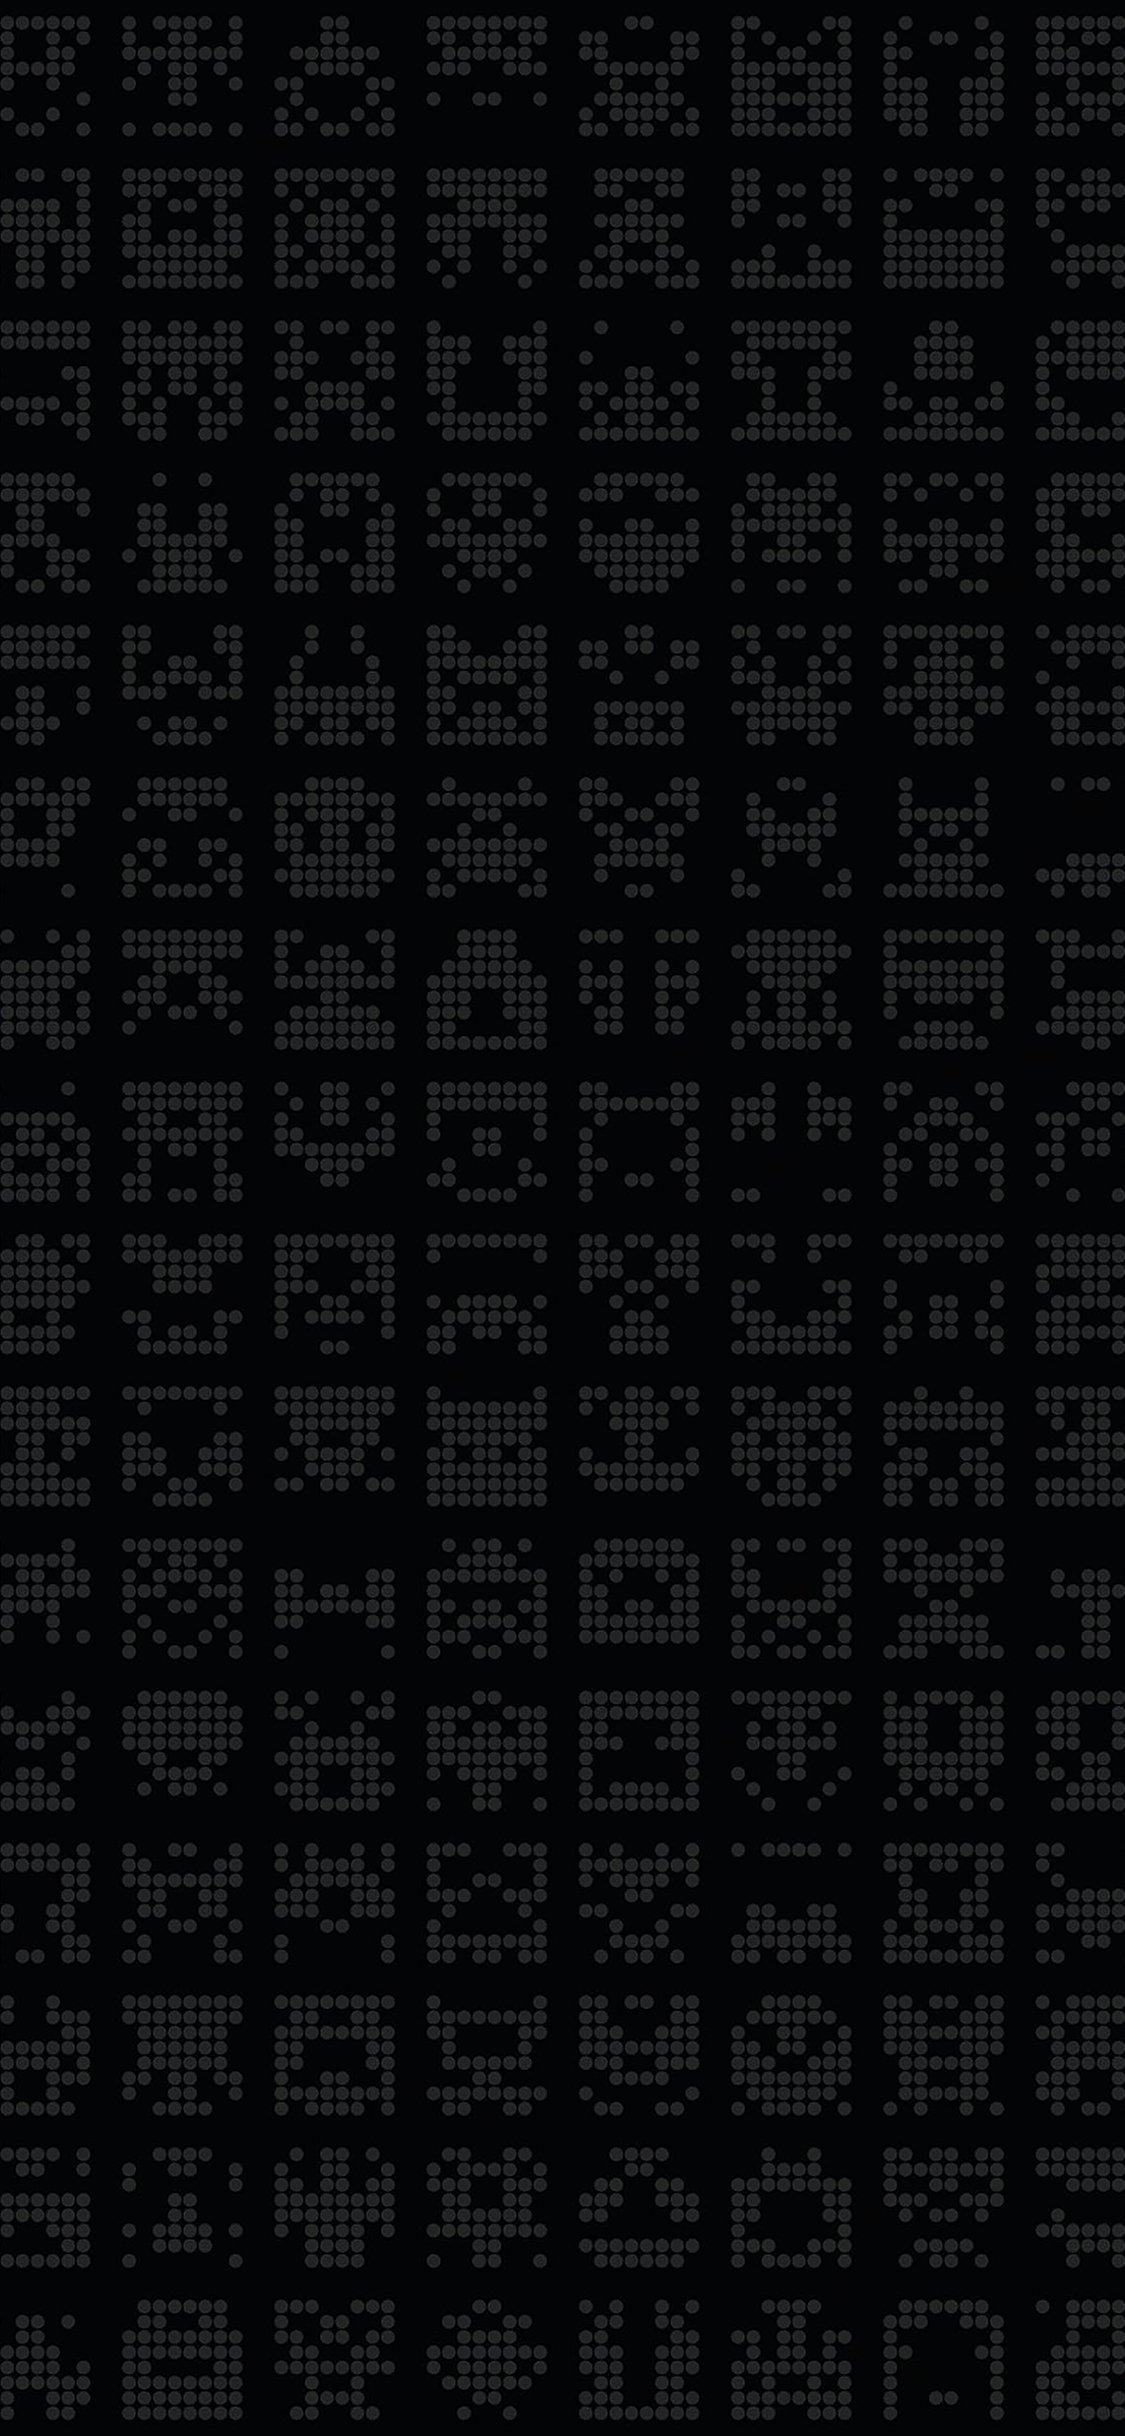 Alien symbol dark pattern iPhone X Wallpaper Free Download